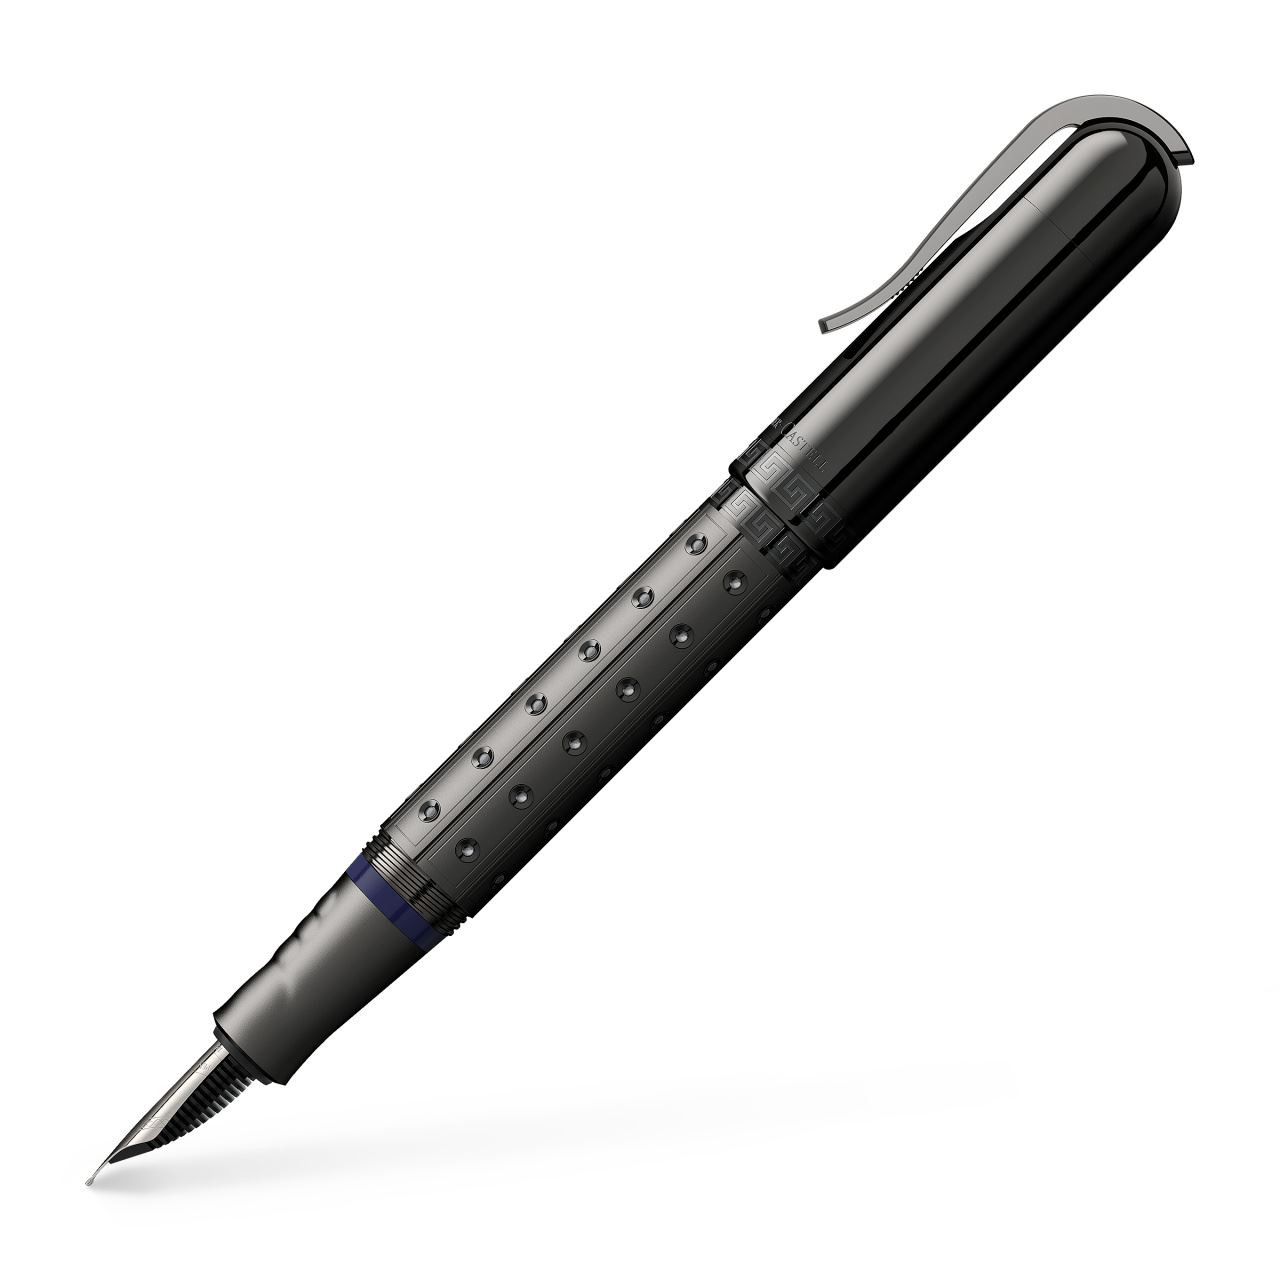 Graf-von-Faber-Castell - Penna stilografica Pen of The Year 2020 Black Edition, BB